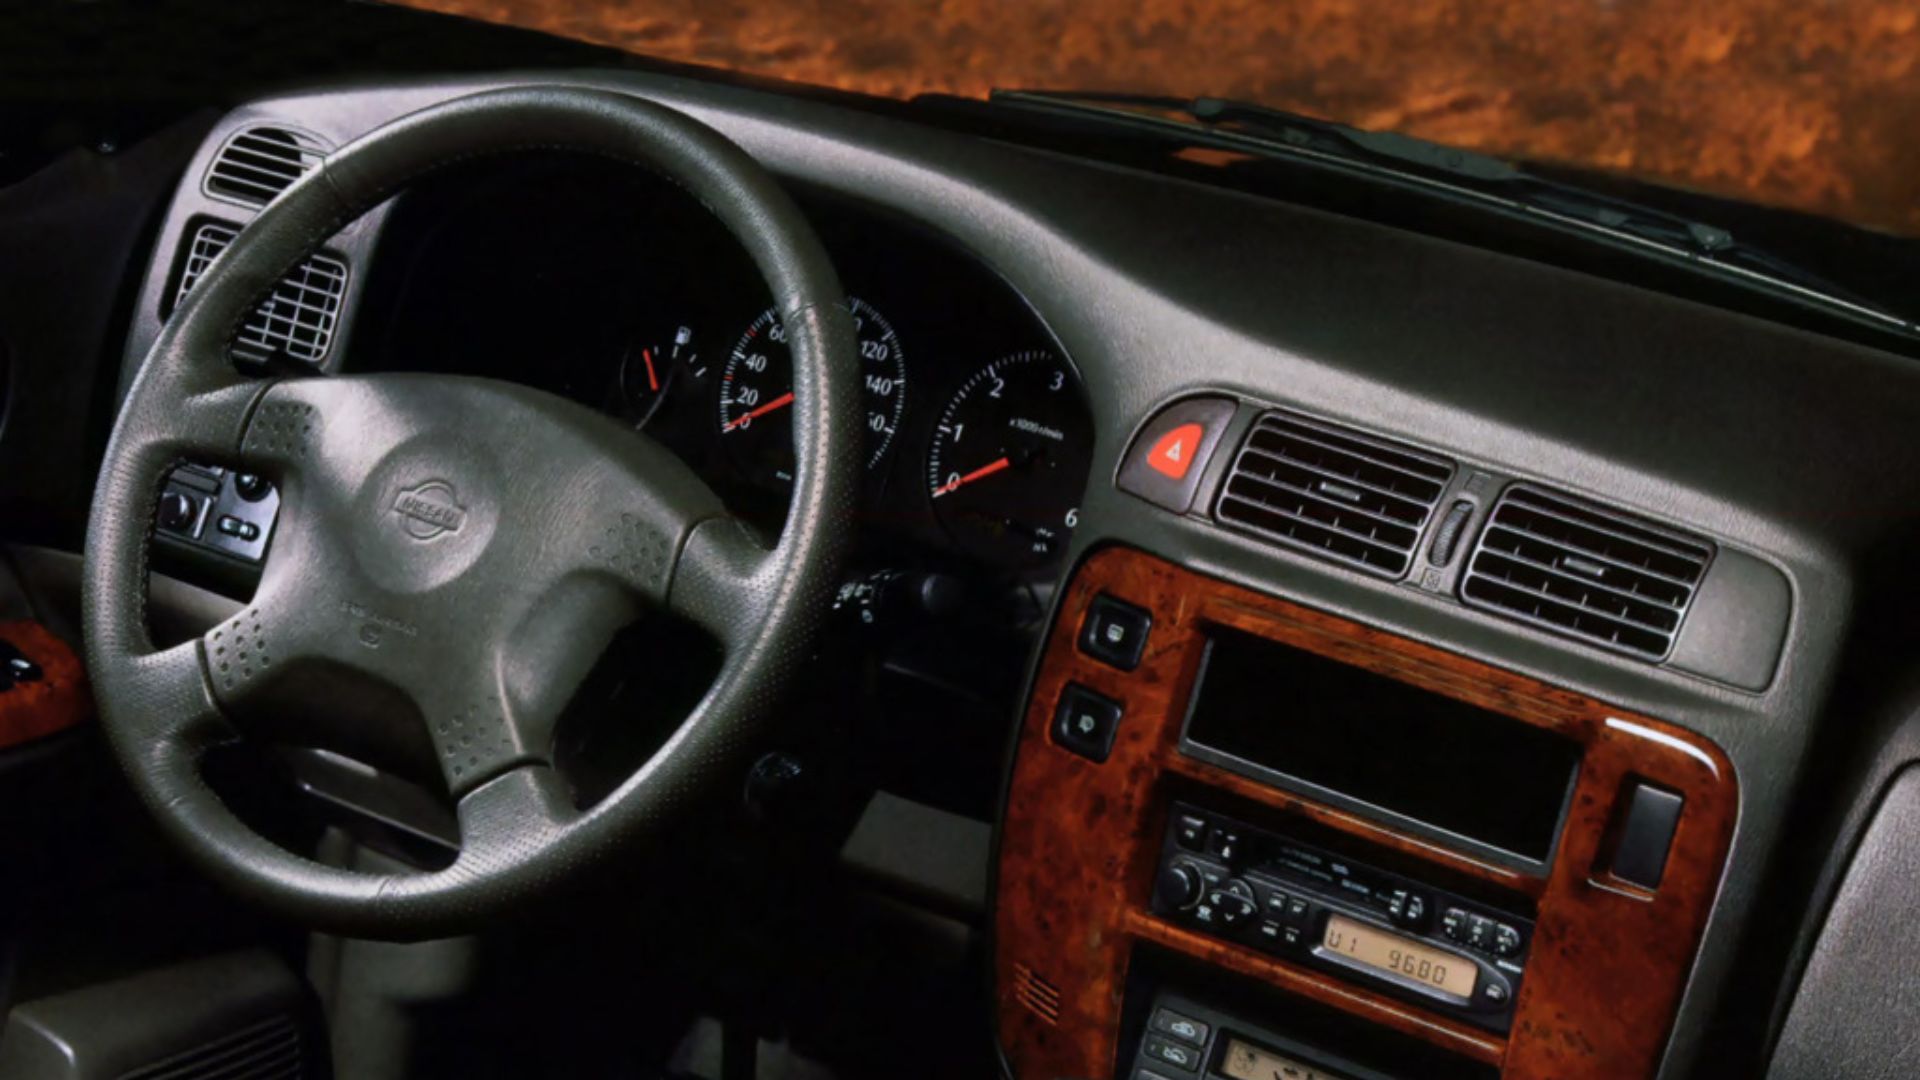 Nissan Patrol Y61 first release interior